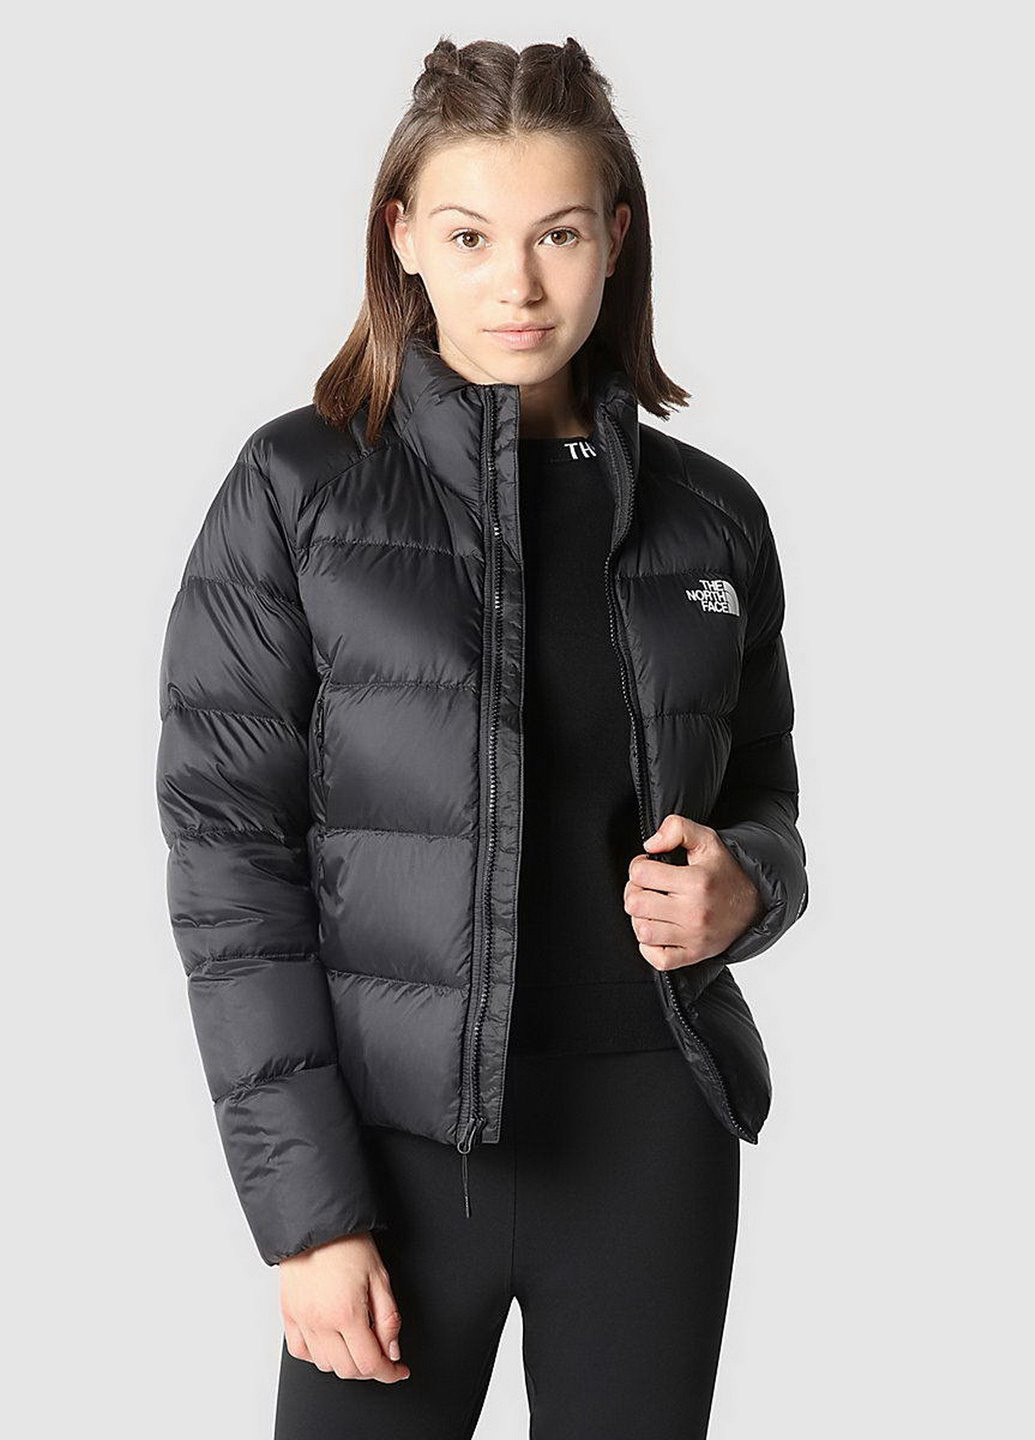 Черная зимняя женская зимняя куртка w hyalite down jacket nf0a3y4sjk31 The North Face